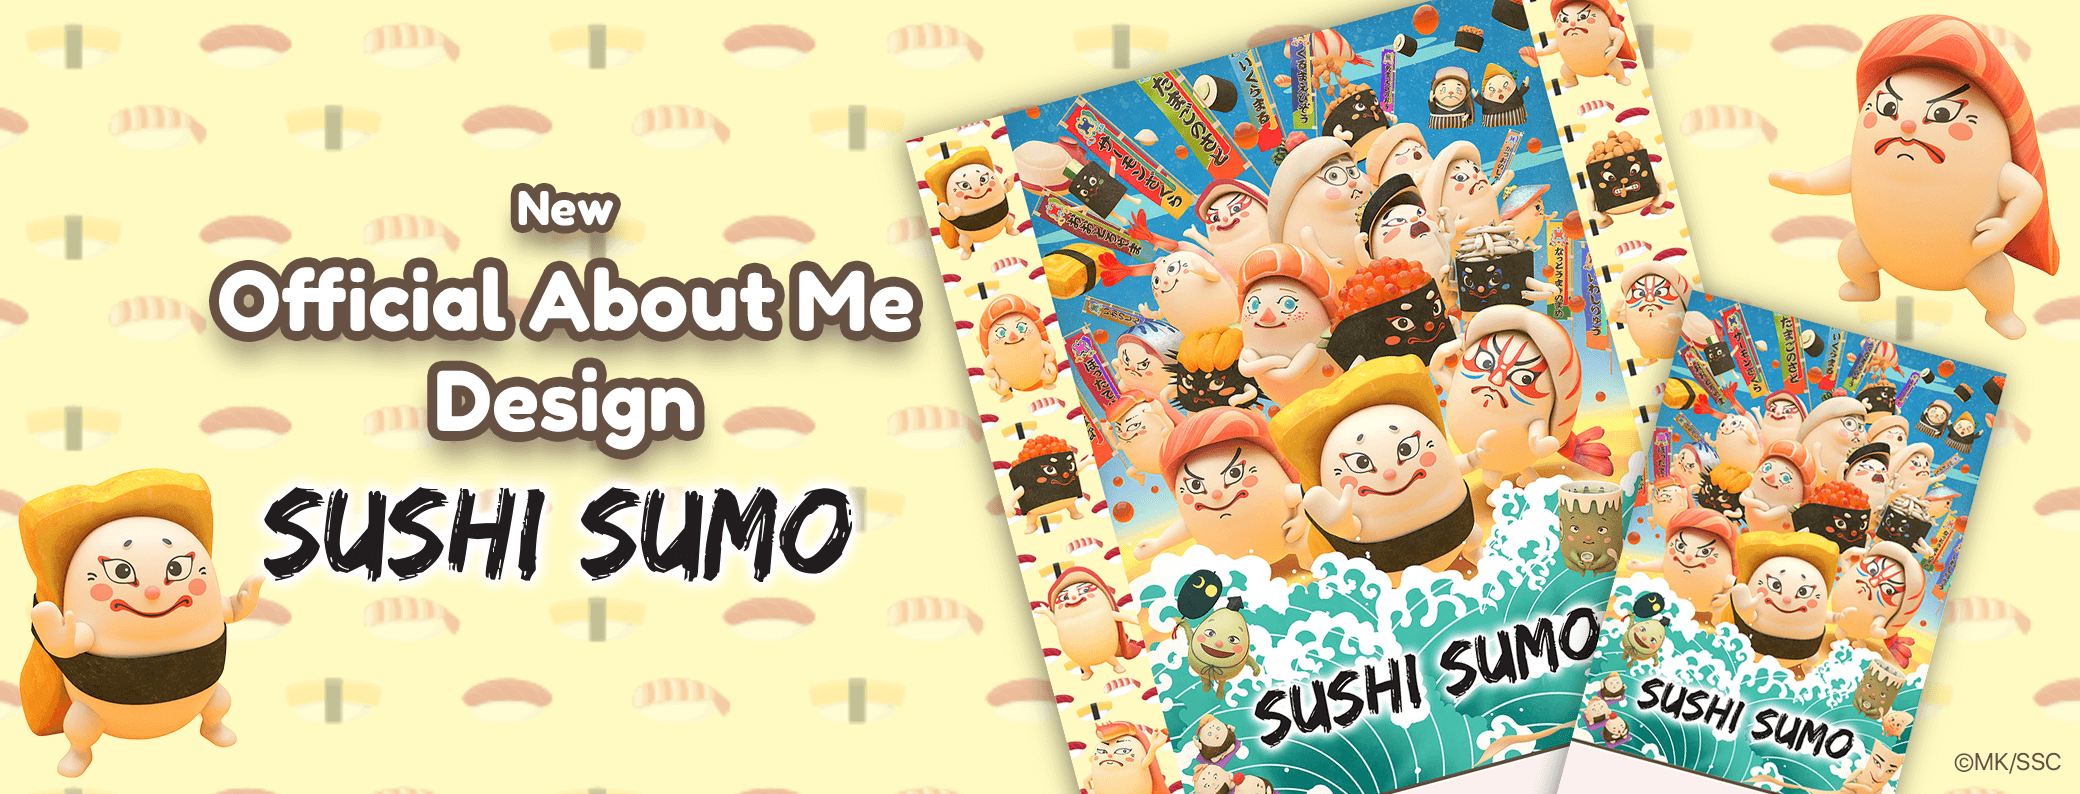 Sushi Sumo Profile Designs